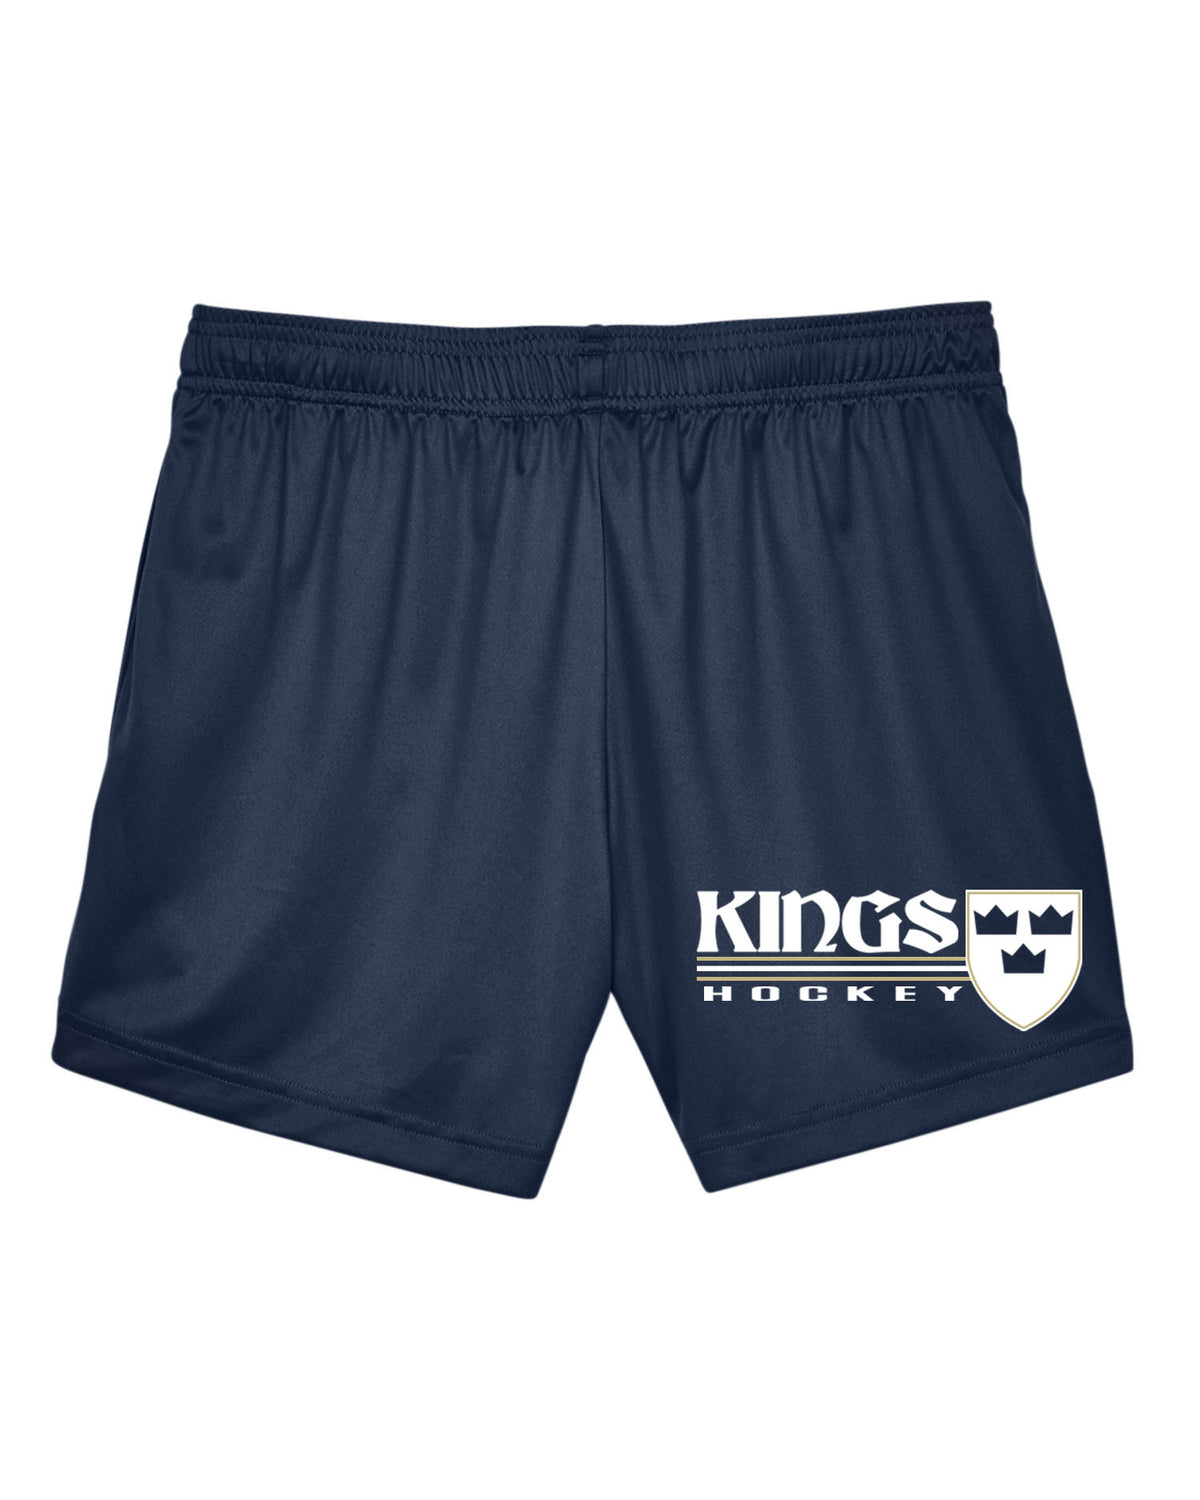 Kings Hockey Ladies Performance Design 3 Shorts